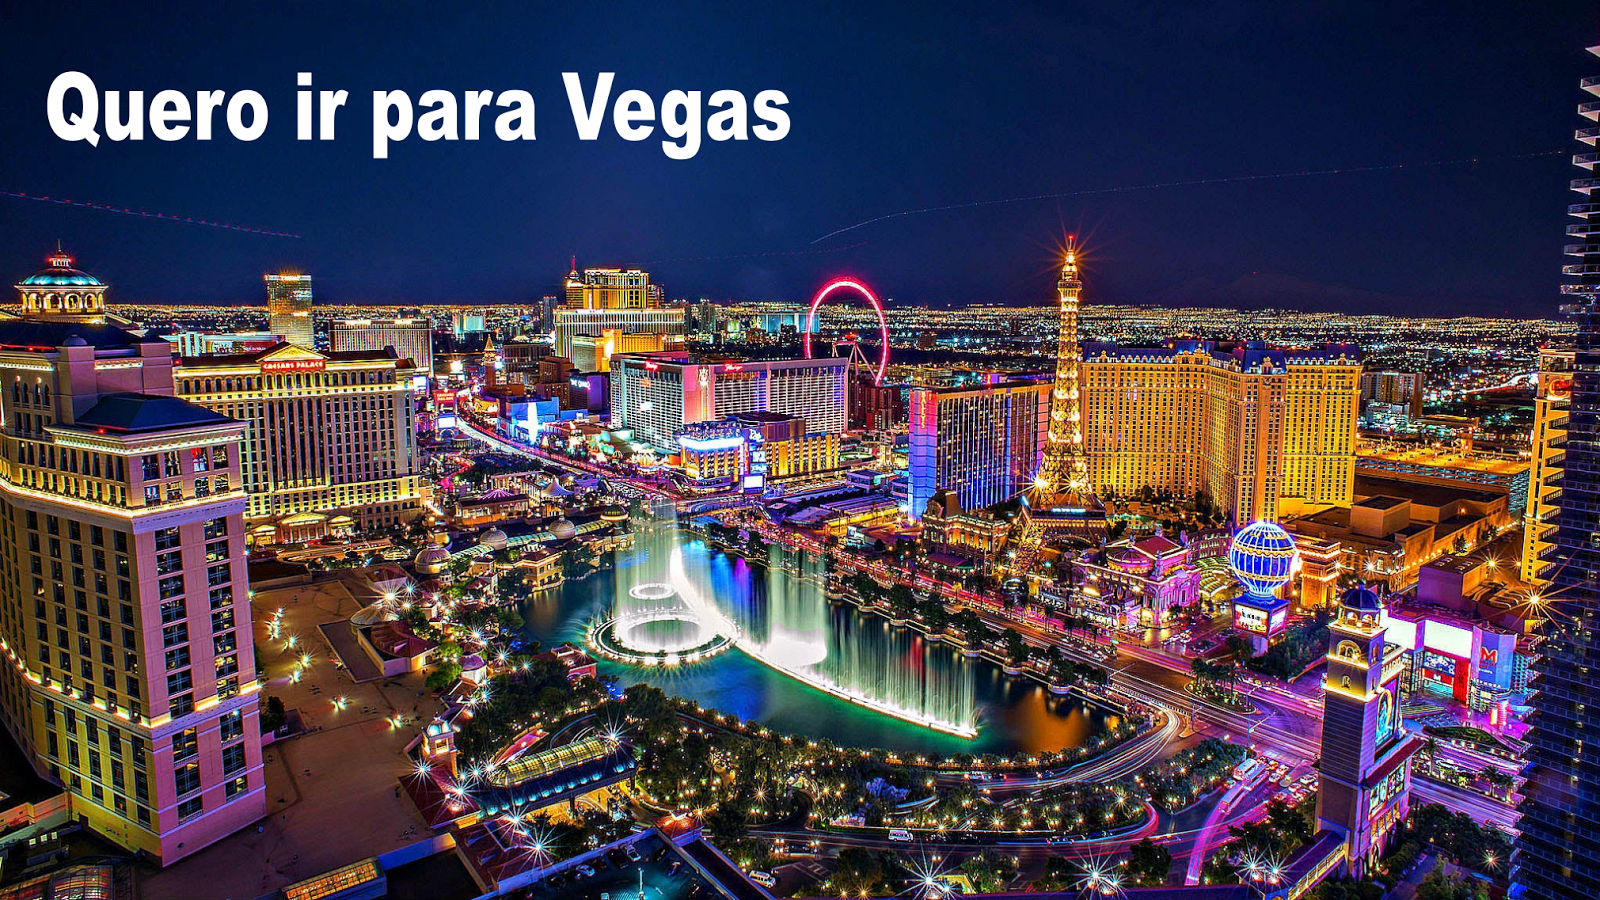 Quero ir para Vegas